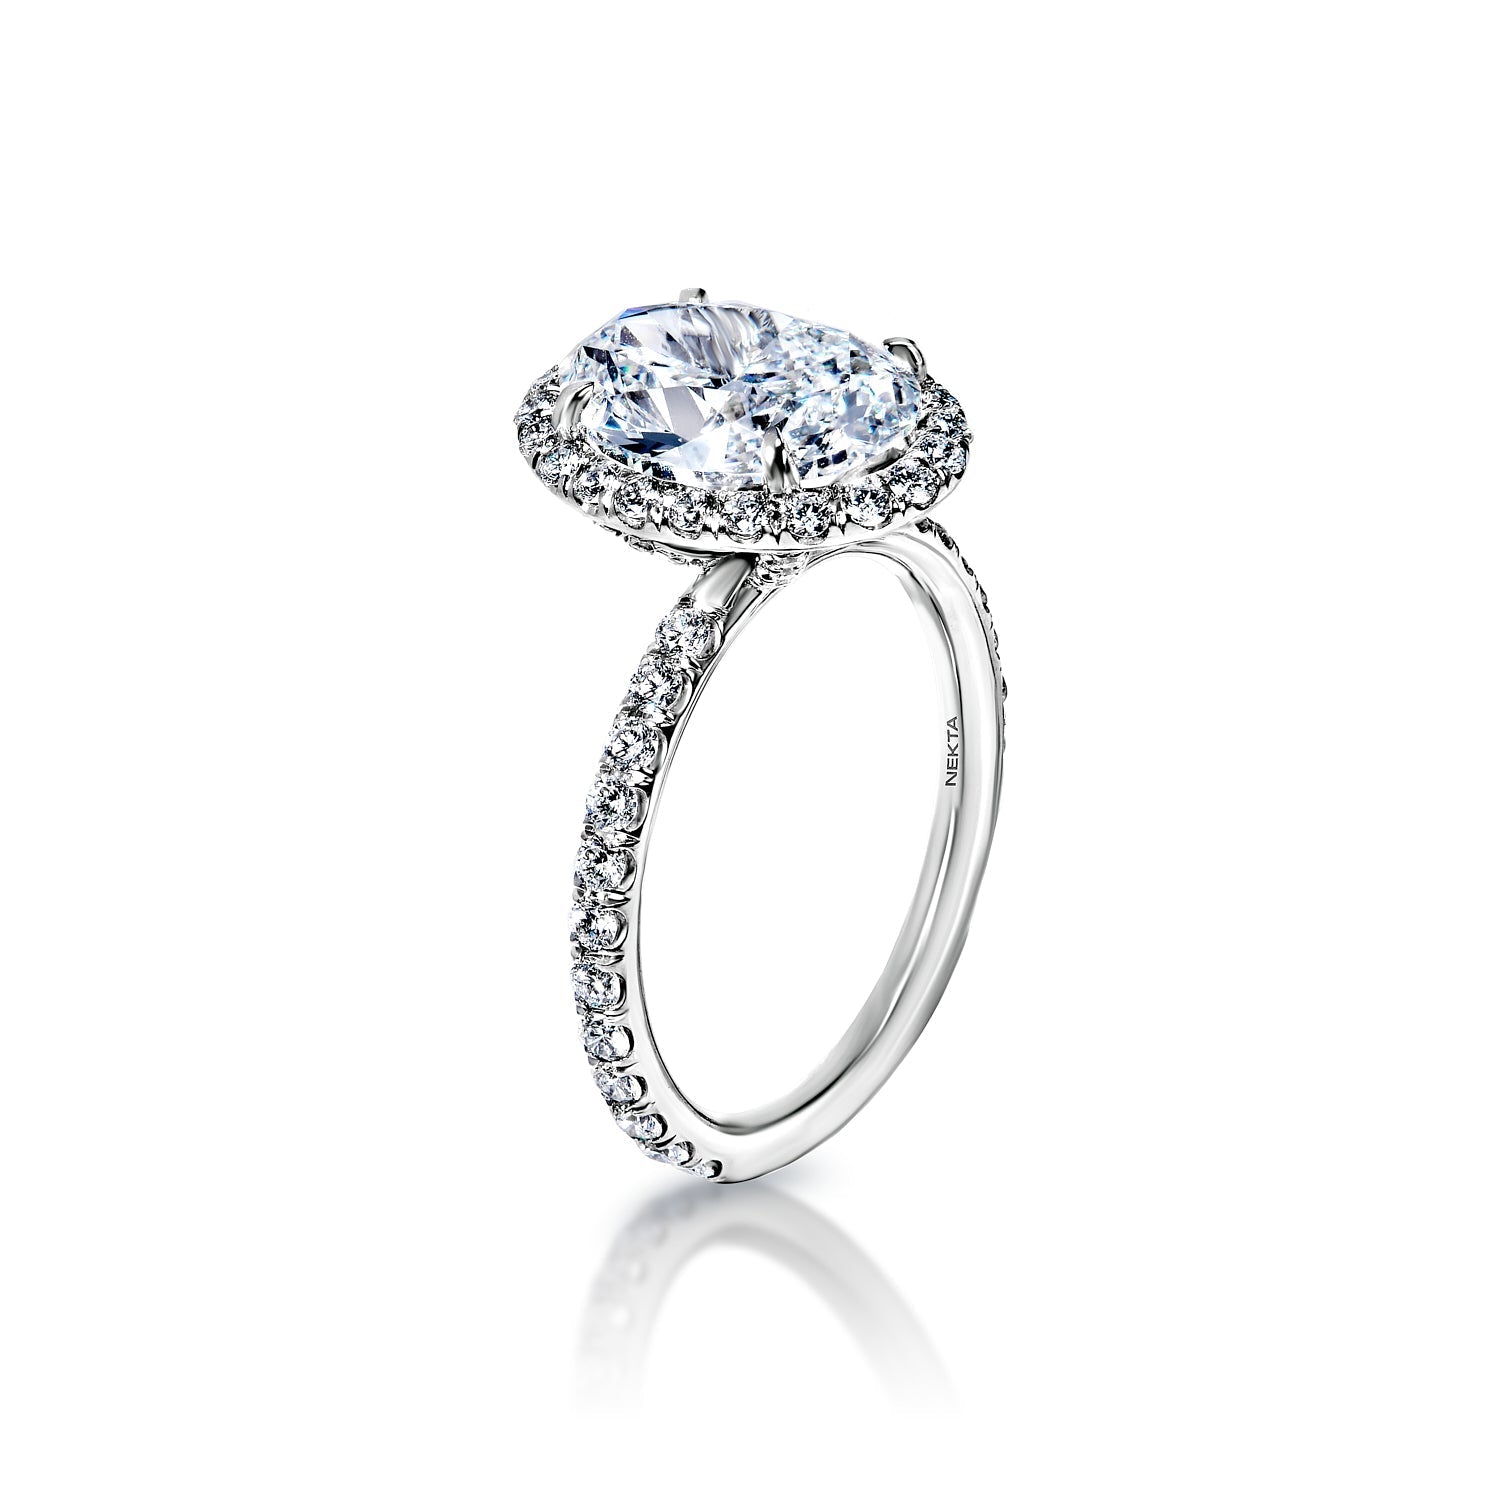 Rosa 4 Carat D VVS2 Oval Cut Diamond Engagement Ring in Platinum Side View